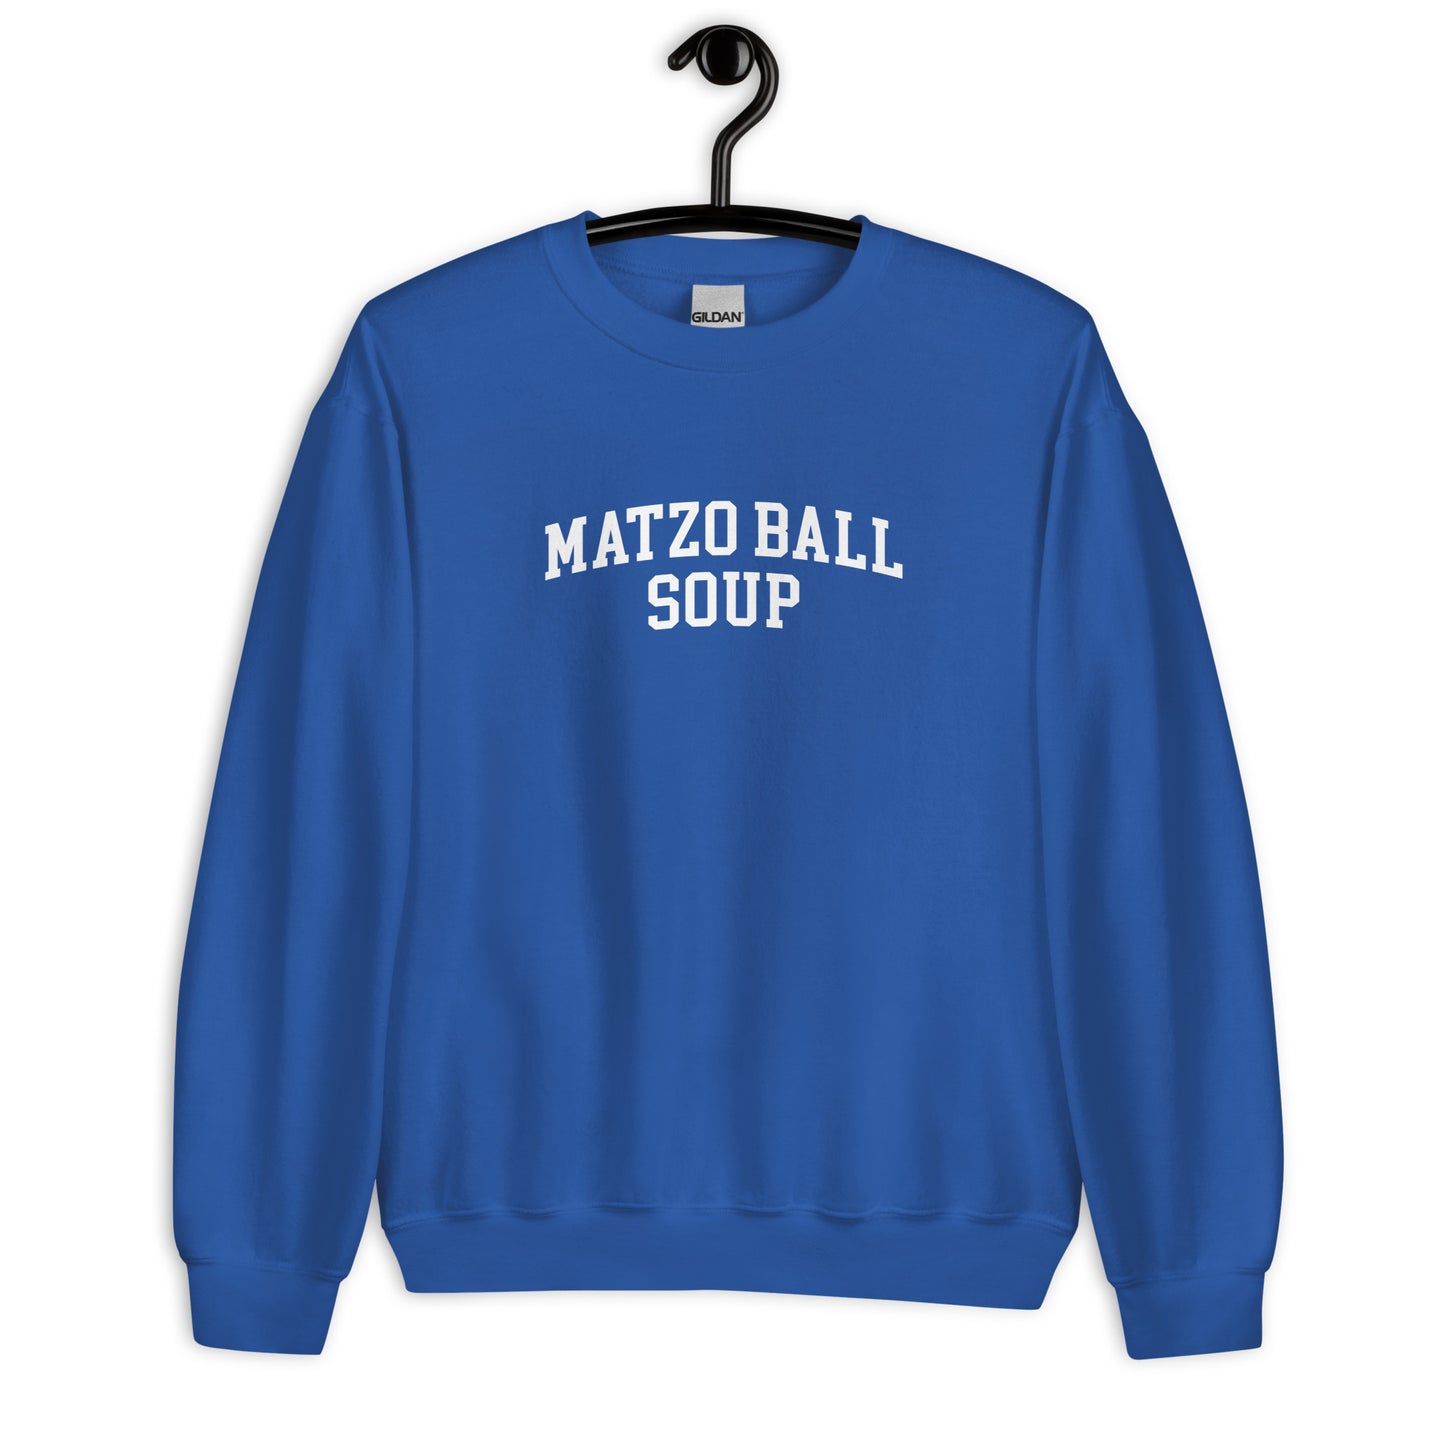 Matzo Ball Soup Sweatshirt - Arched Font